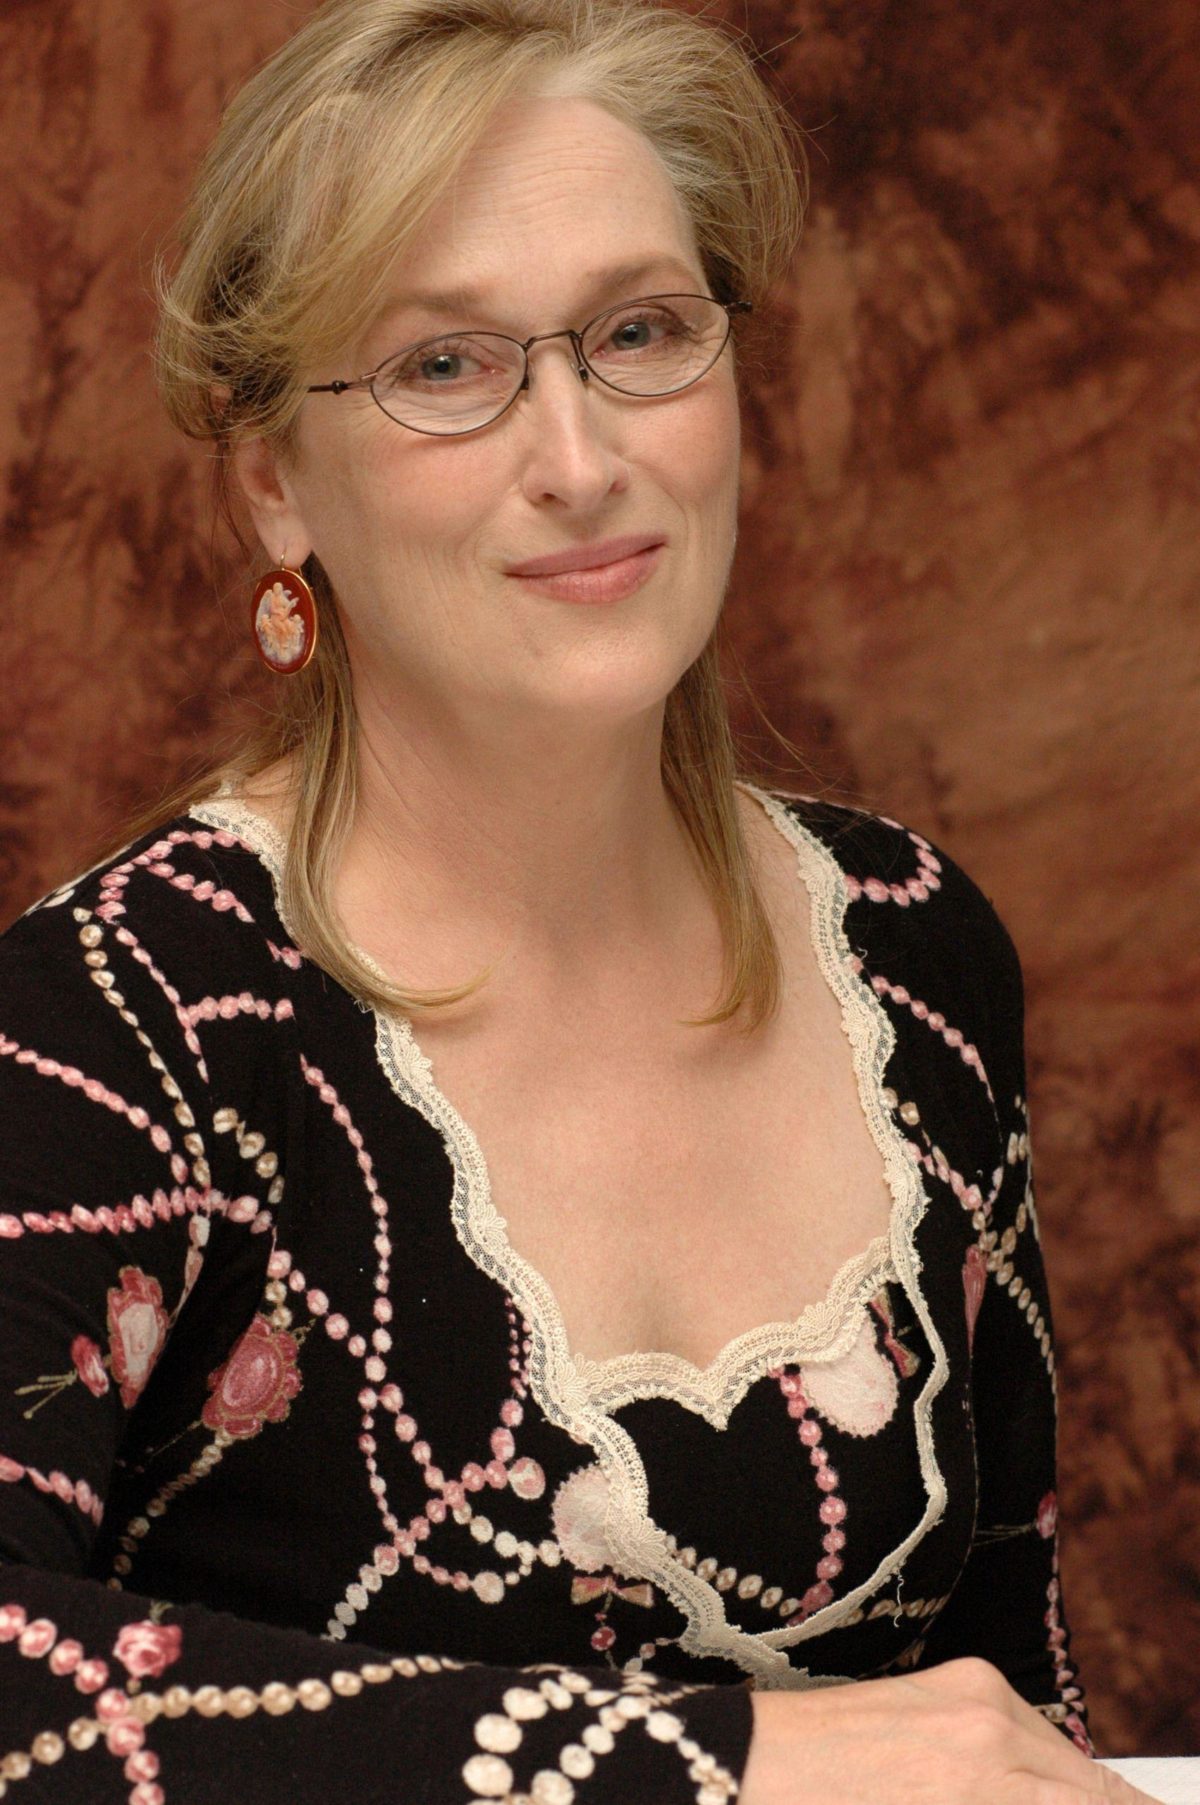 Wallpapers Wallbase Beauty: Meryl Streep – Images Hot